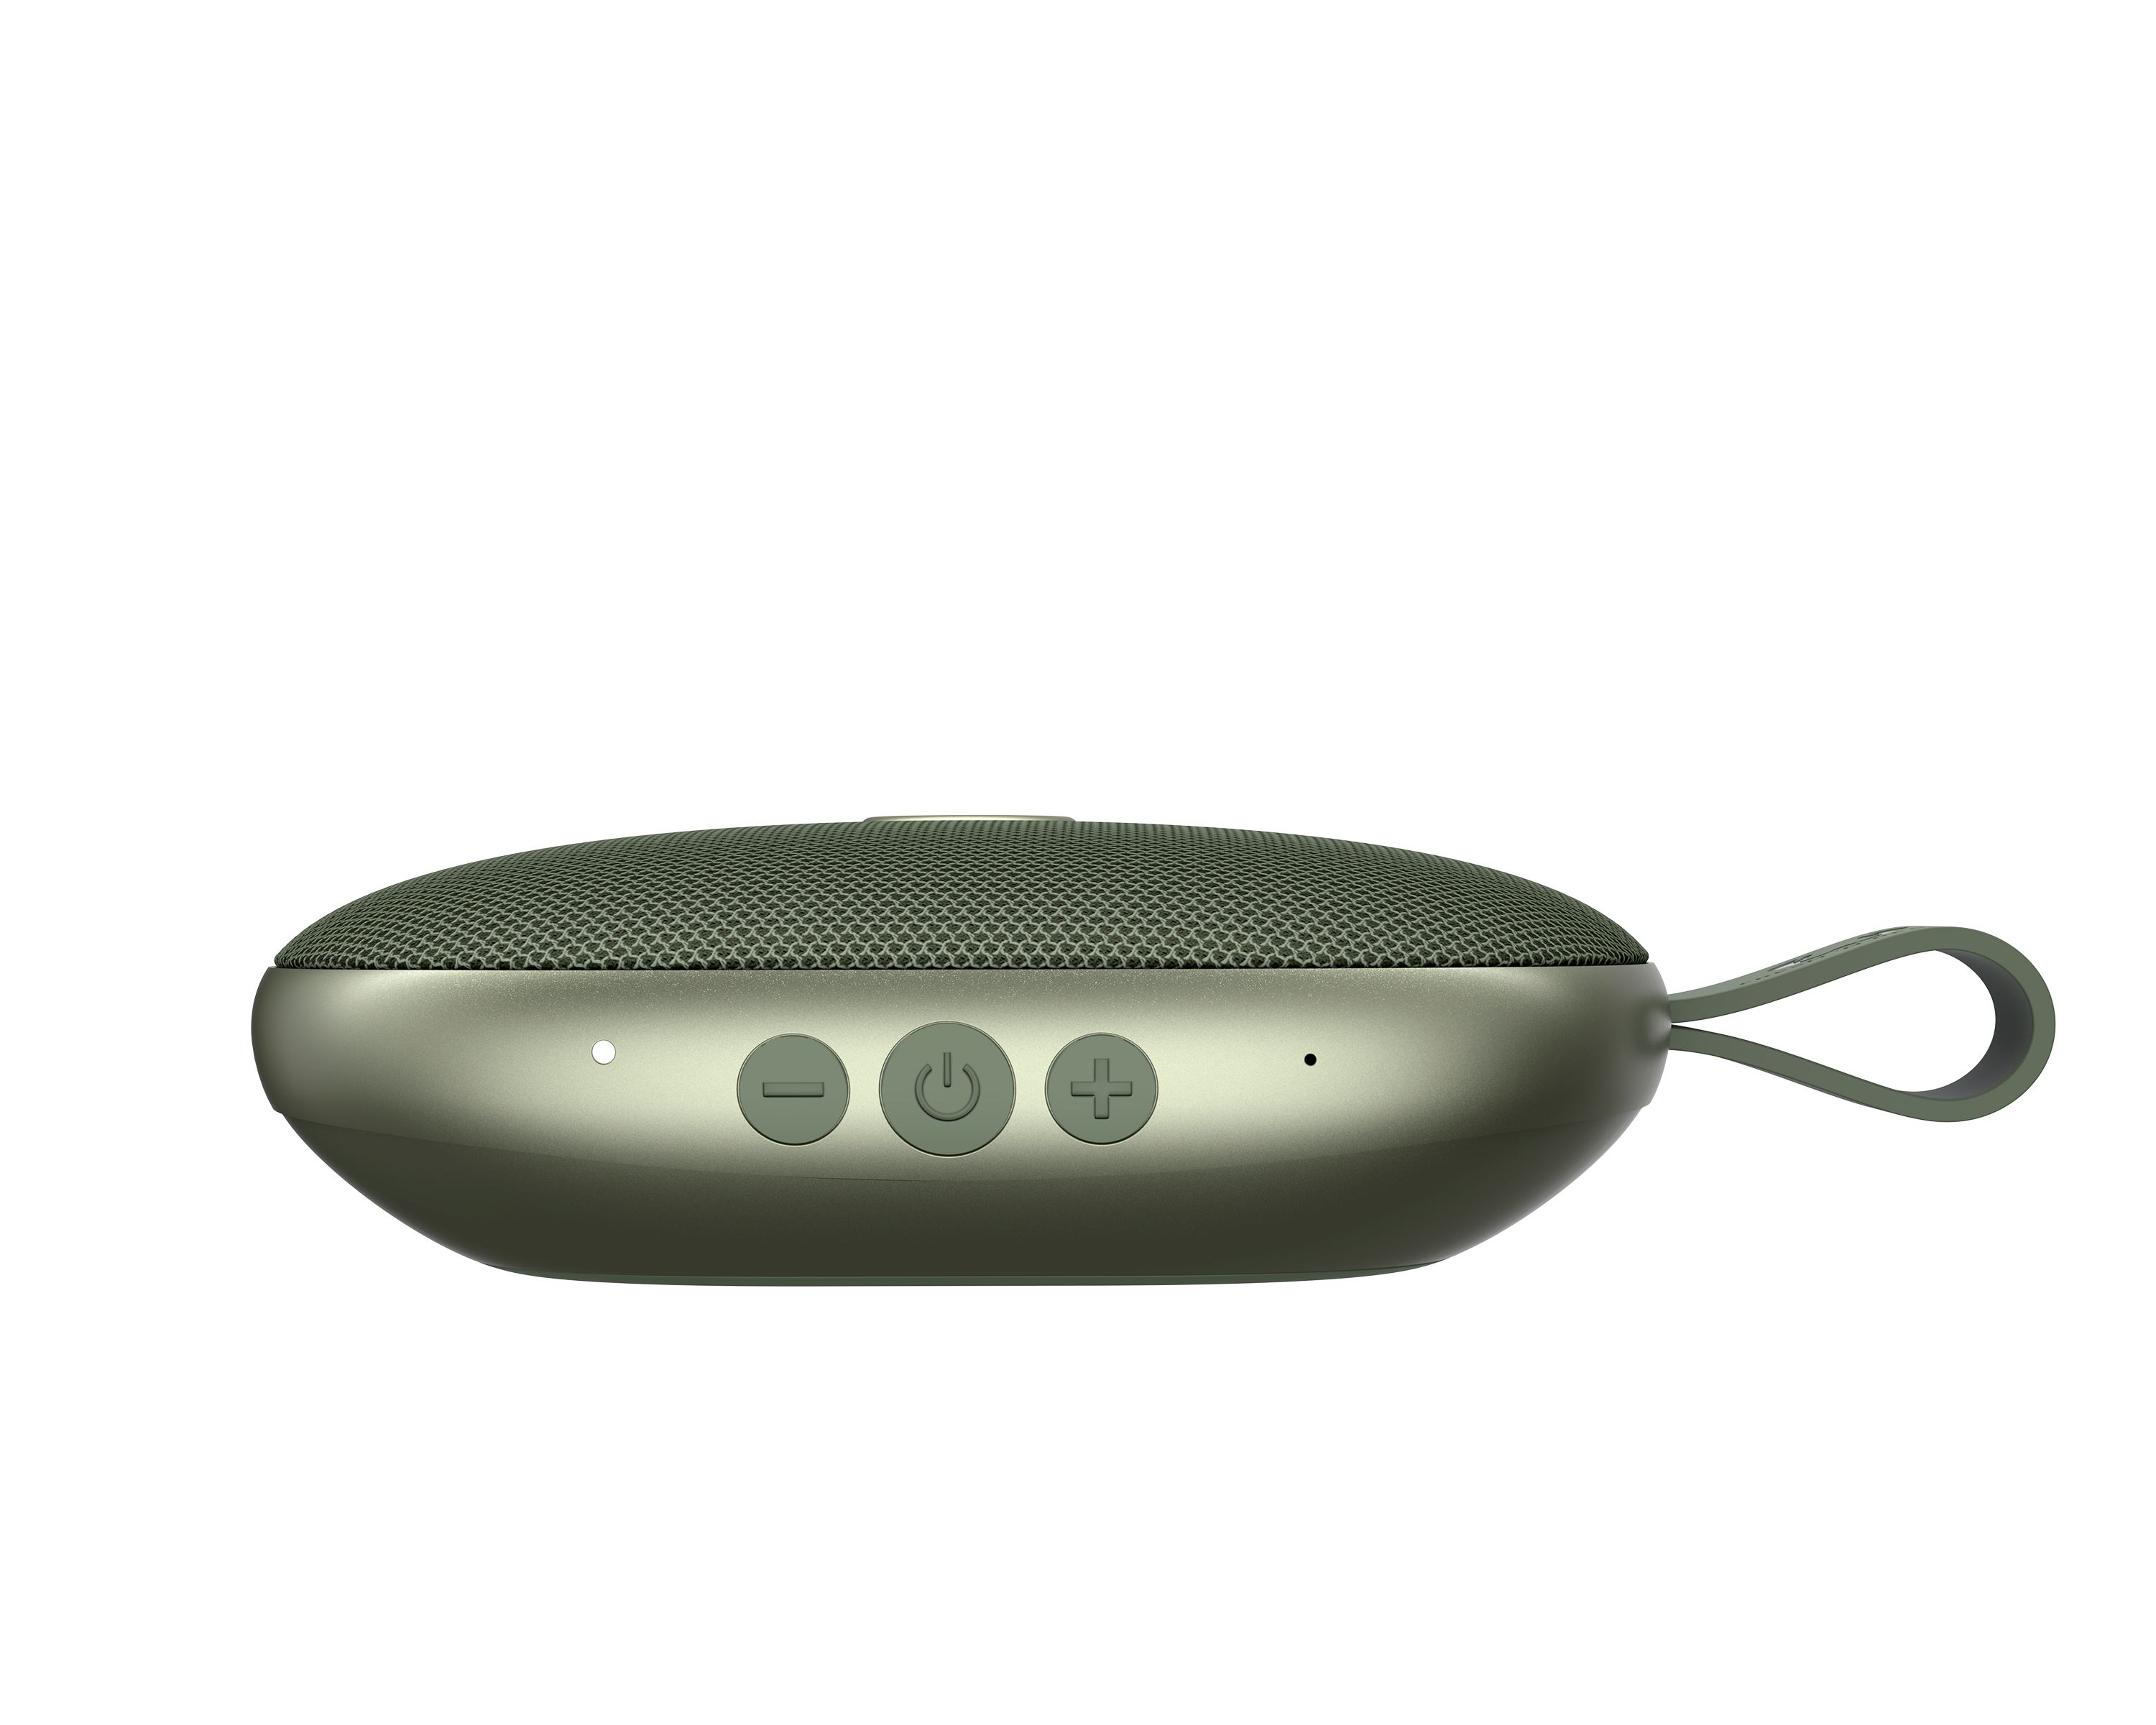 Fresh n Rebel Rockbox BOLD Xs - Wireless Bluetooth speaker - Dried Green |  Dividino